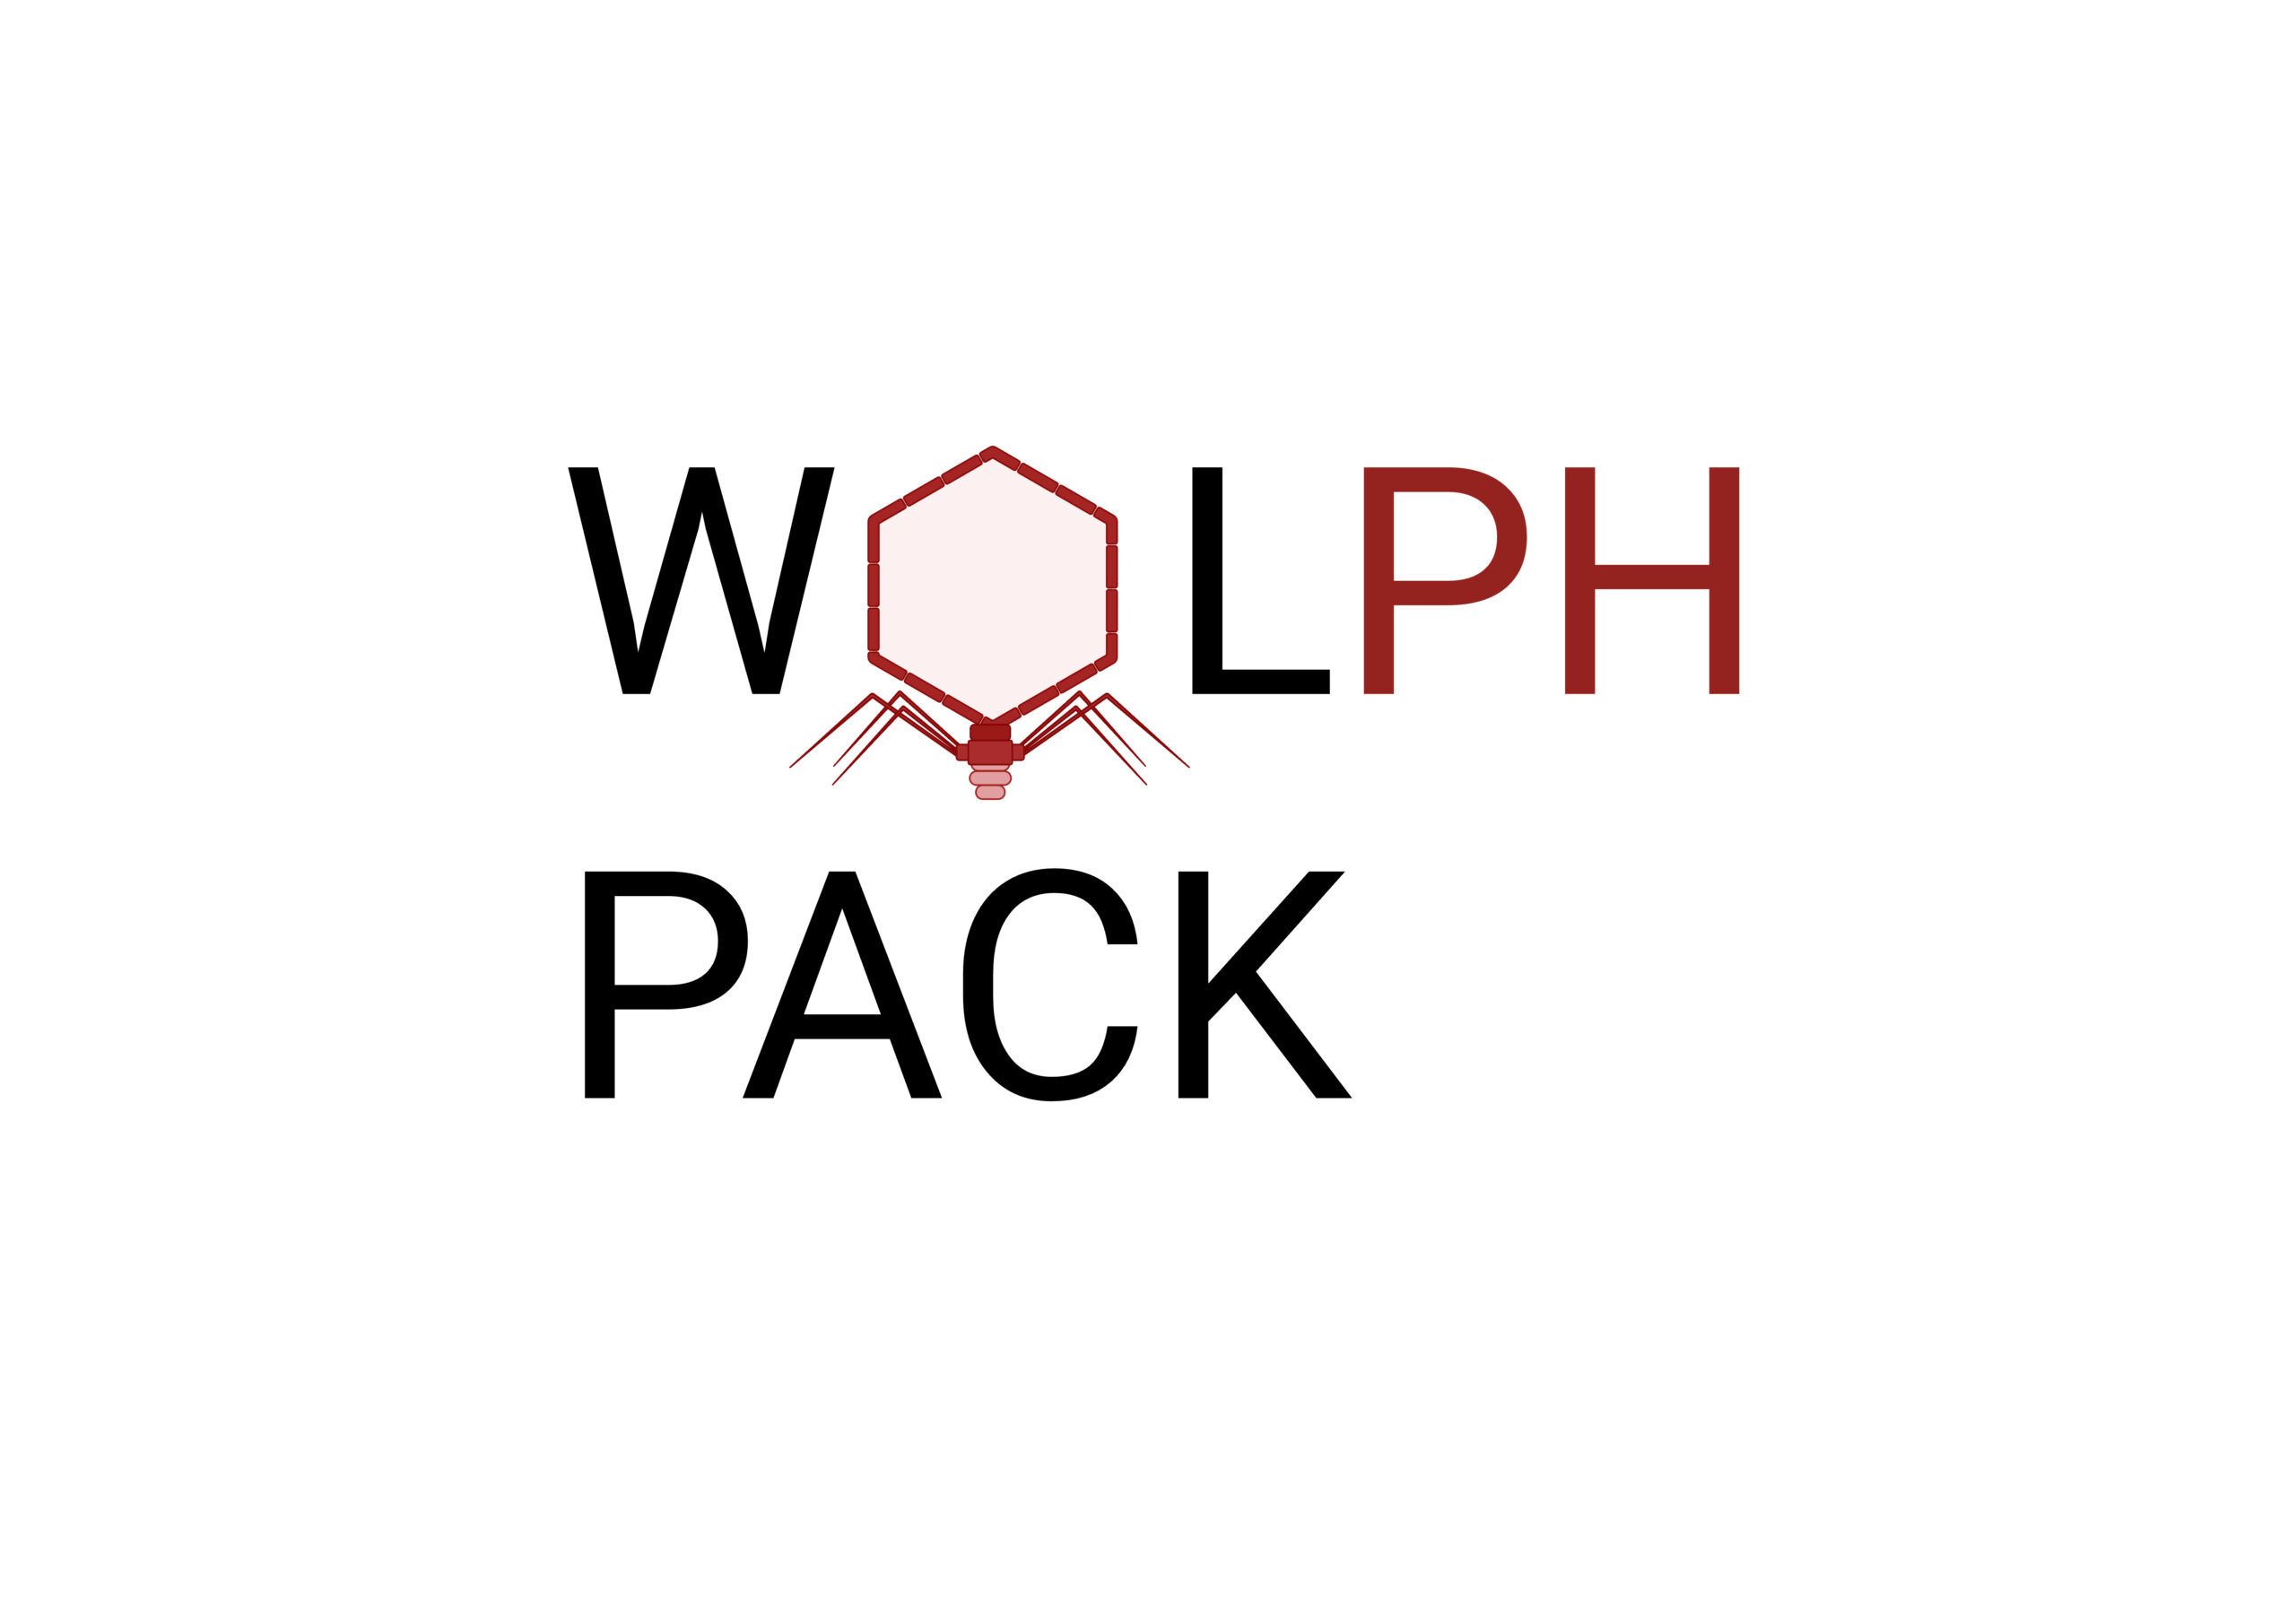 Phage Hunters logo: "Wolph Pack"